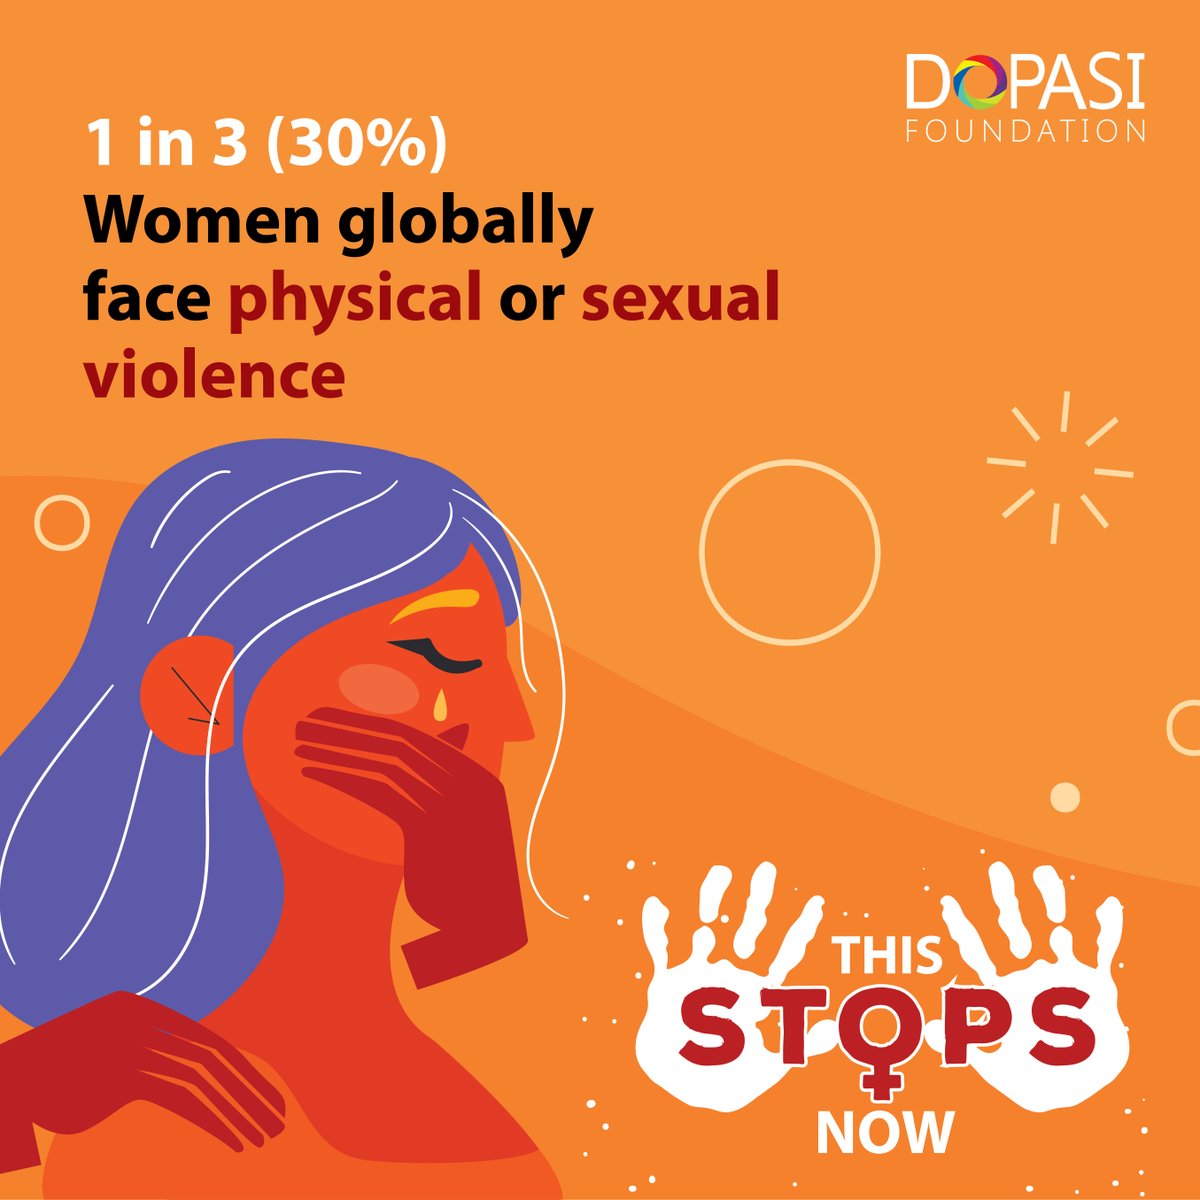 Violence against women stops now!

#16DaysOfActivism #EndGBV #stopviolenceagainstwomen #advocacy #womenrightske